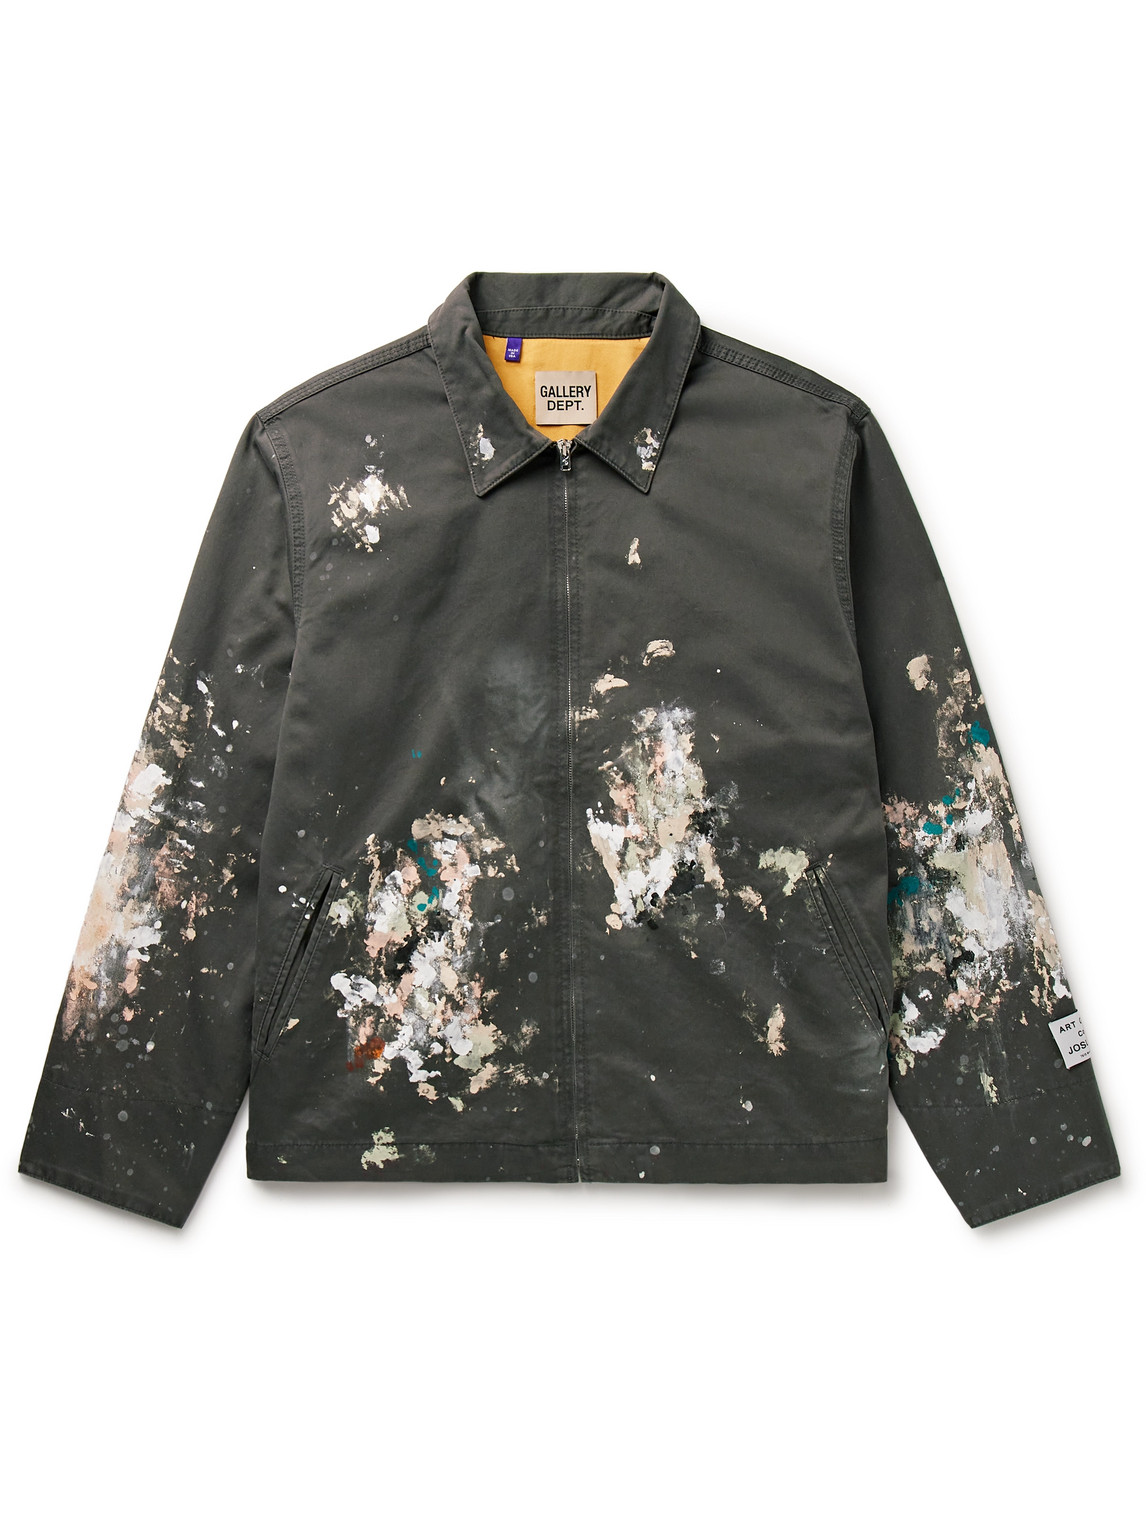 Gallery Dept. Montecito Paint-splattered Cotton-twill Jacket In Black